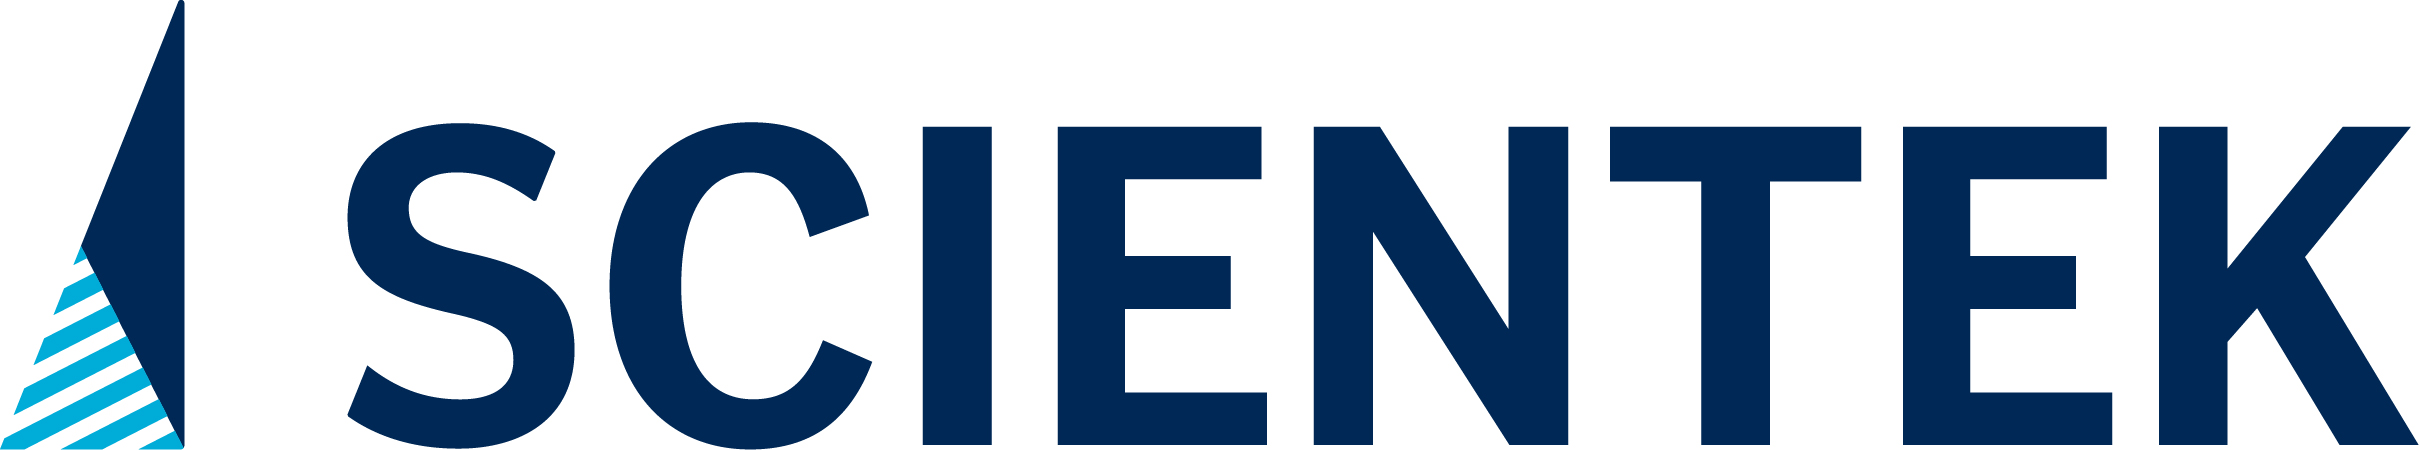 scientek_logo